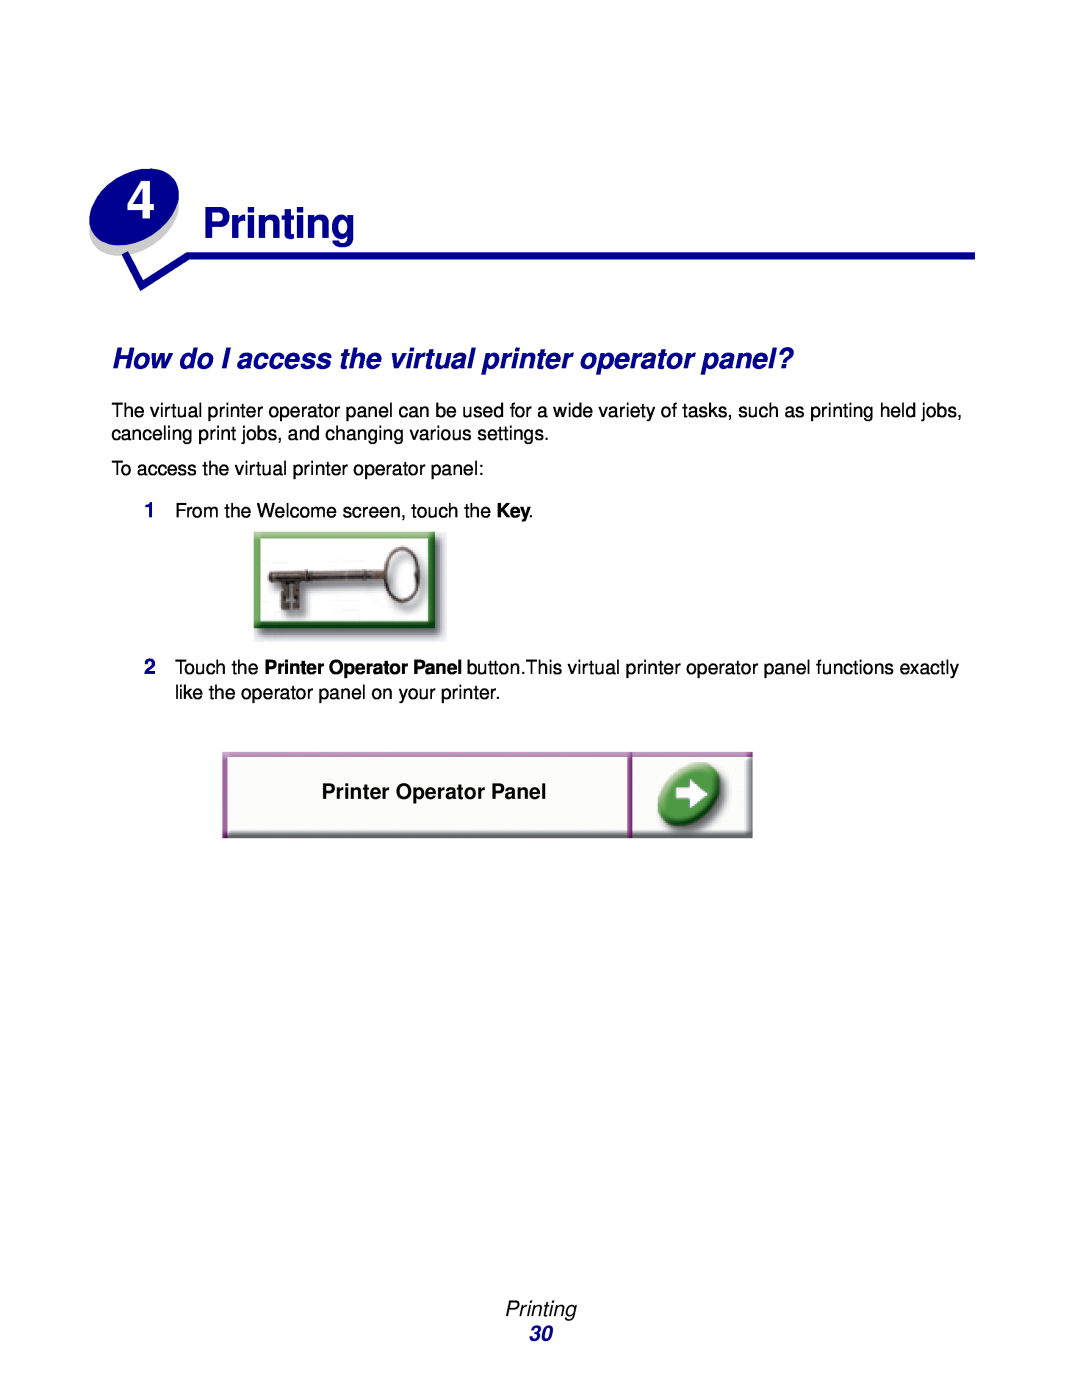 IBM MFP 35, MFP 30 manual Printing, How do I access the virtual printer operator panel?, Printer Operator Panel 